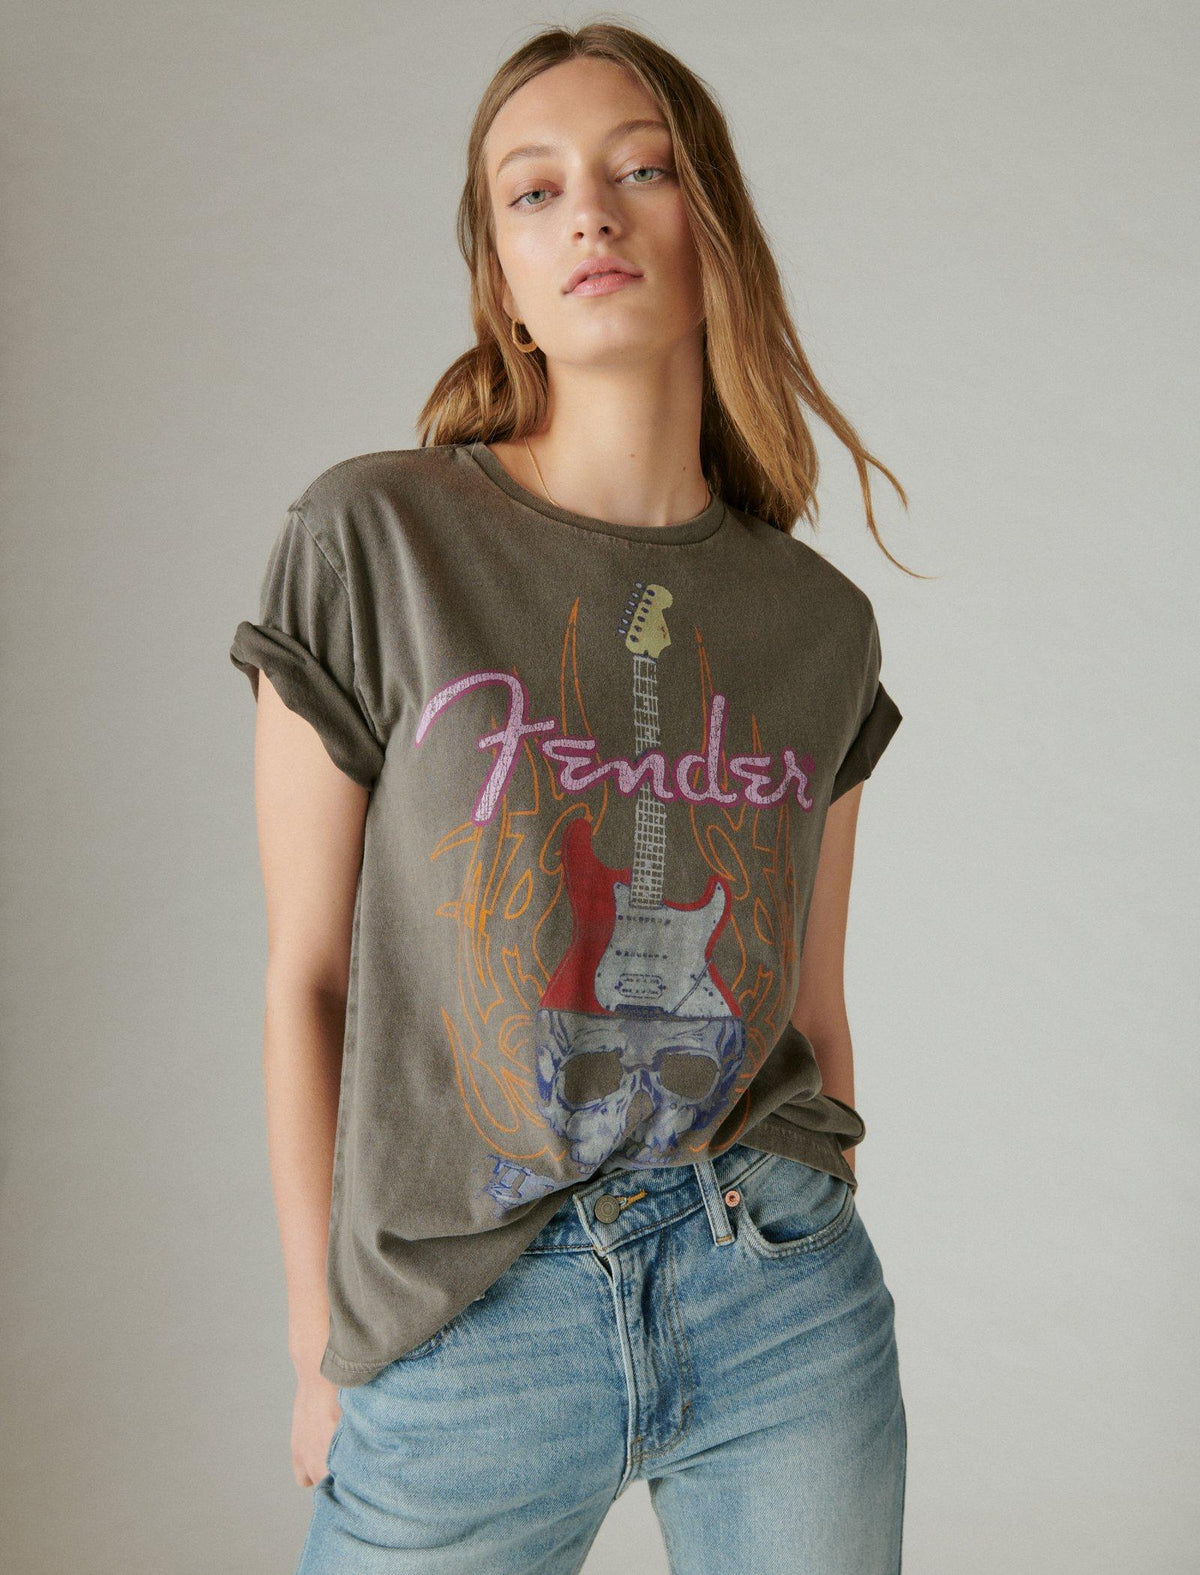 Lucky Brand Fender Skull Boyfriend Tee - Women's Clothing Tops Shirts Tee Graphic T Shirts Shale